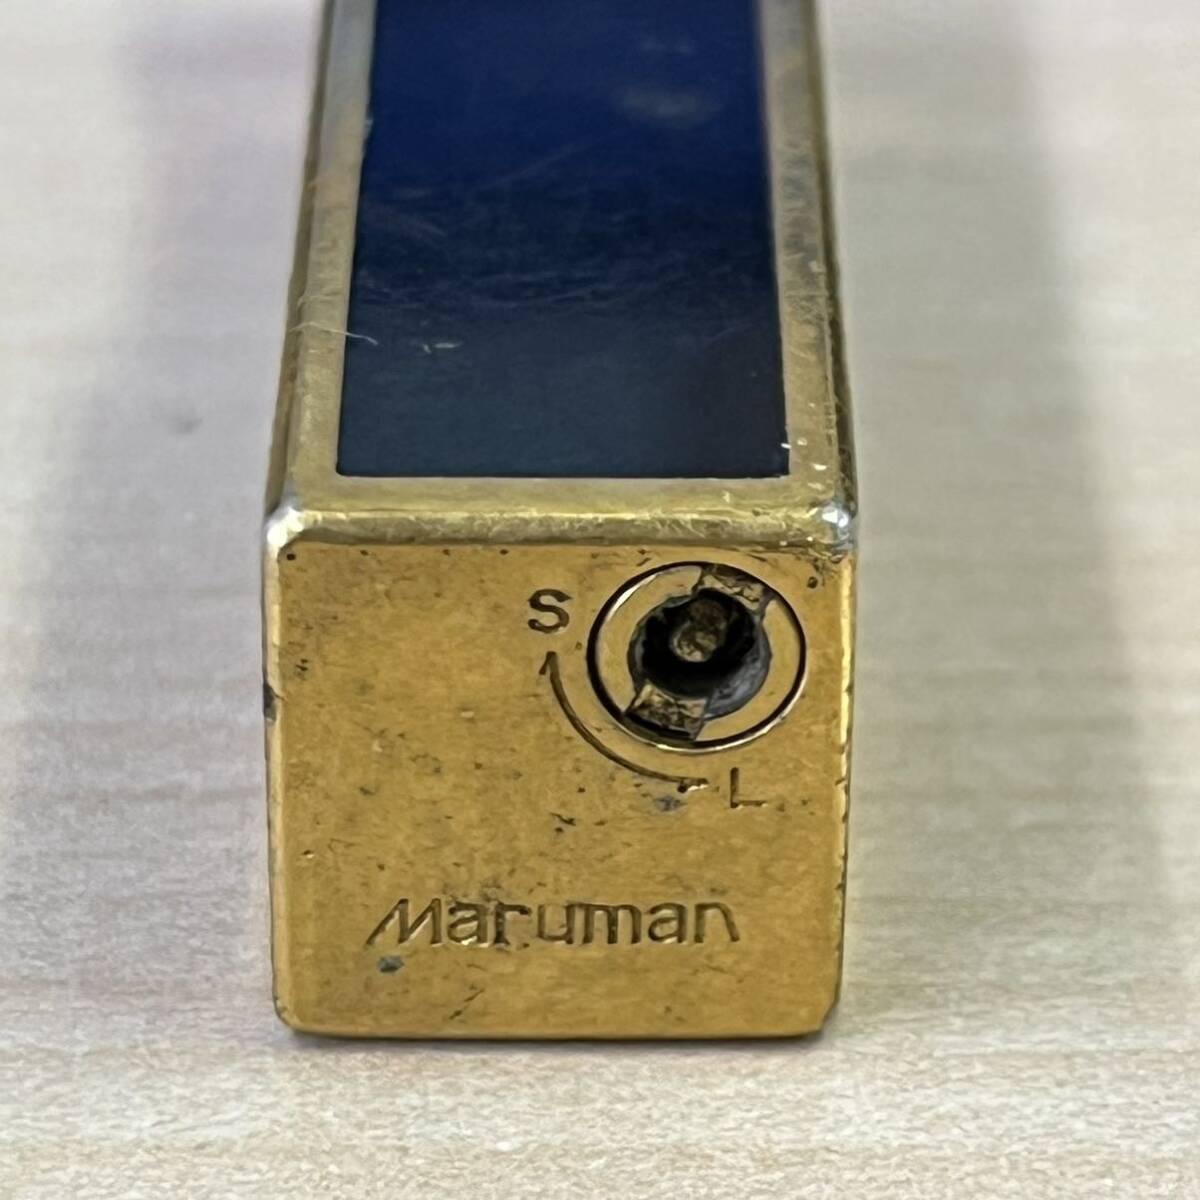 【TS0421】マルマン Maruman ブラック ゴールドカラー ライター 喫煙具 喫煙グッズ 火花未確認 着火未確認の画像7